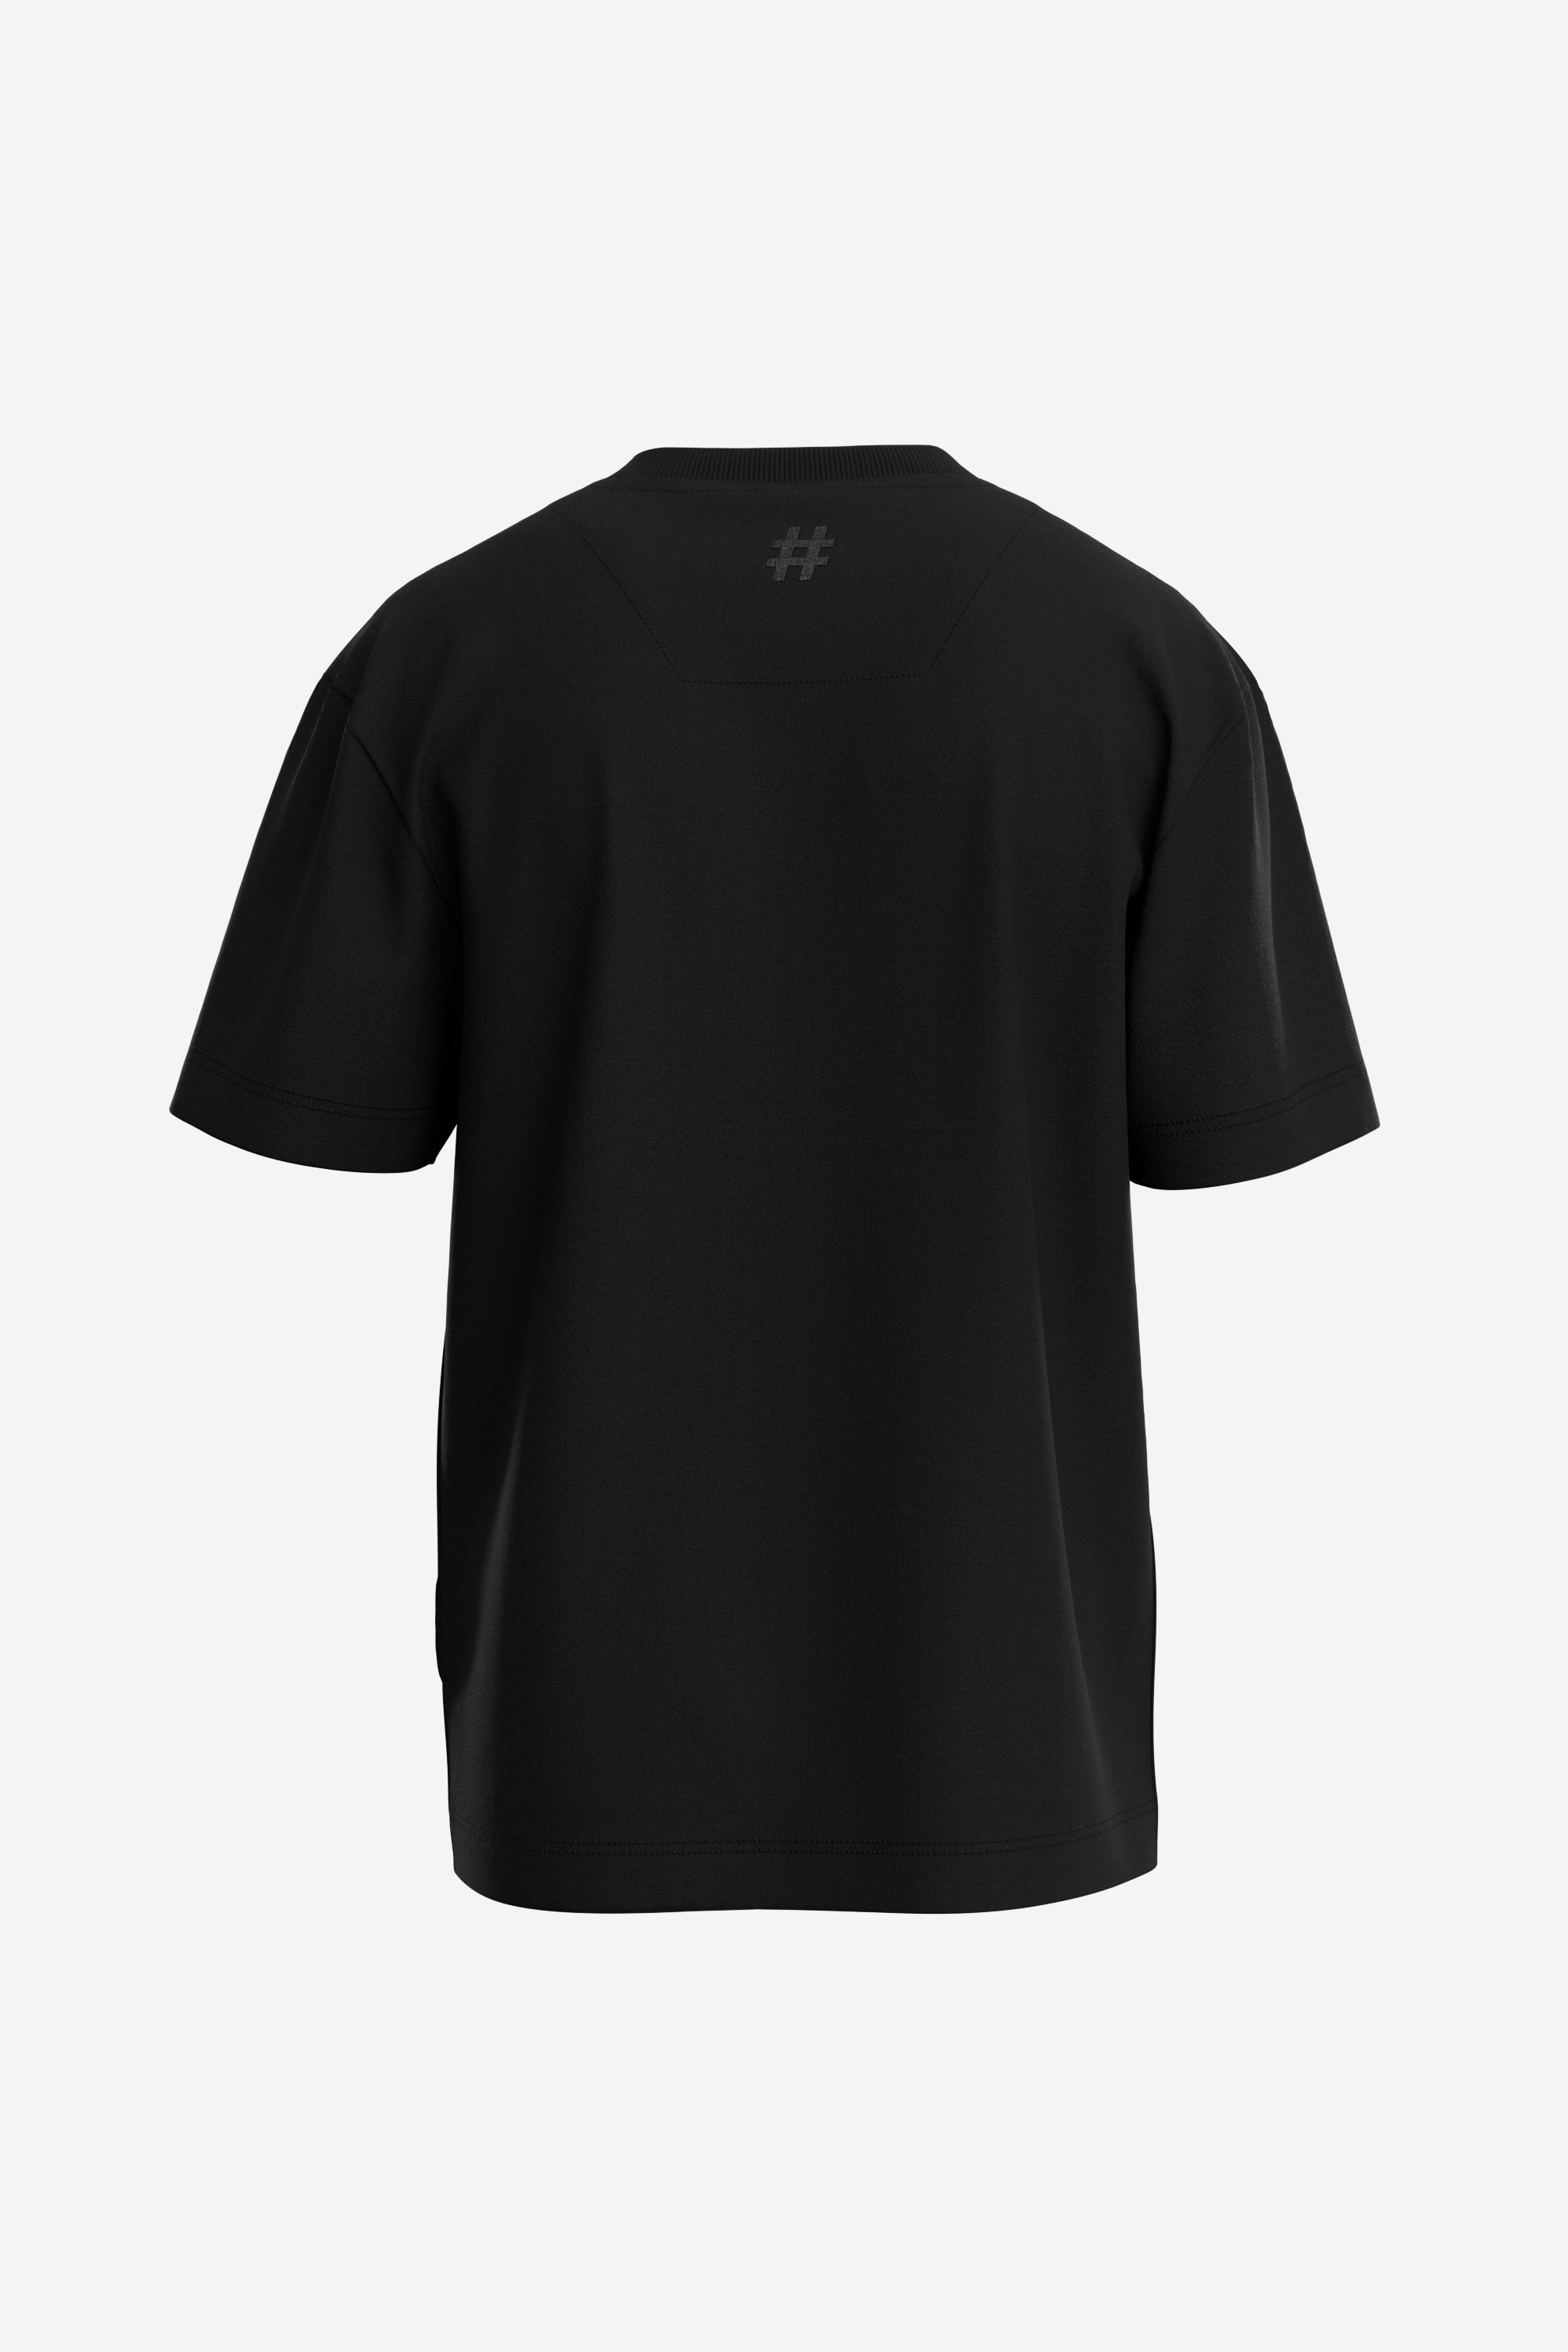 Flock Black Mercerize T-Shirt